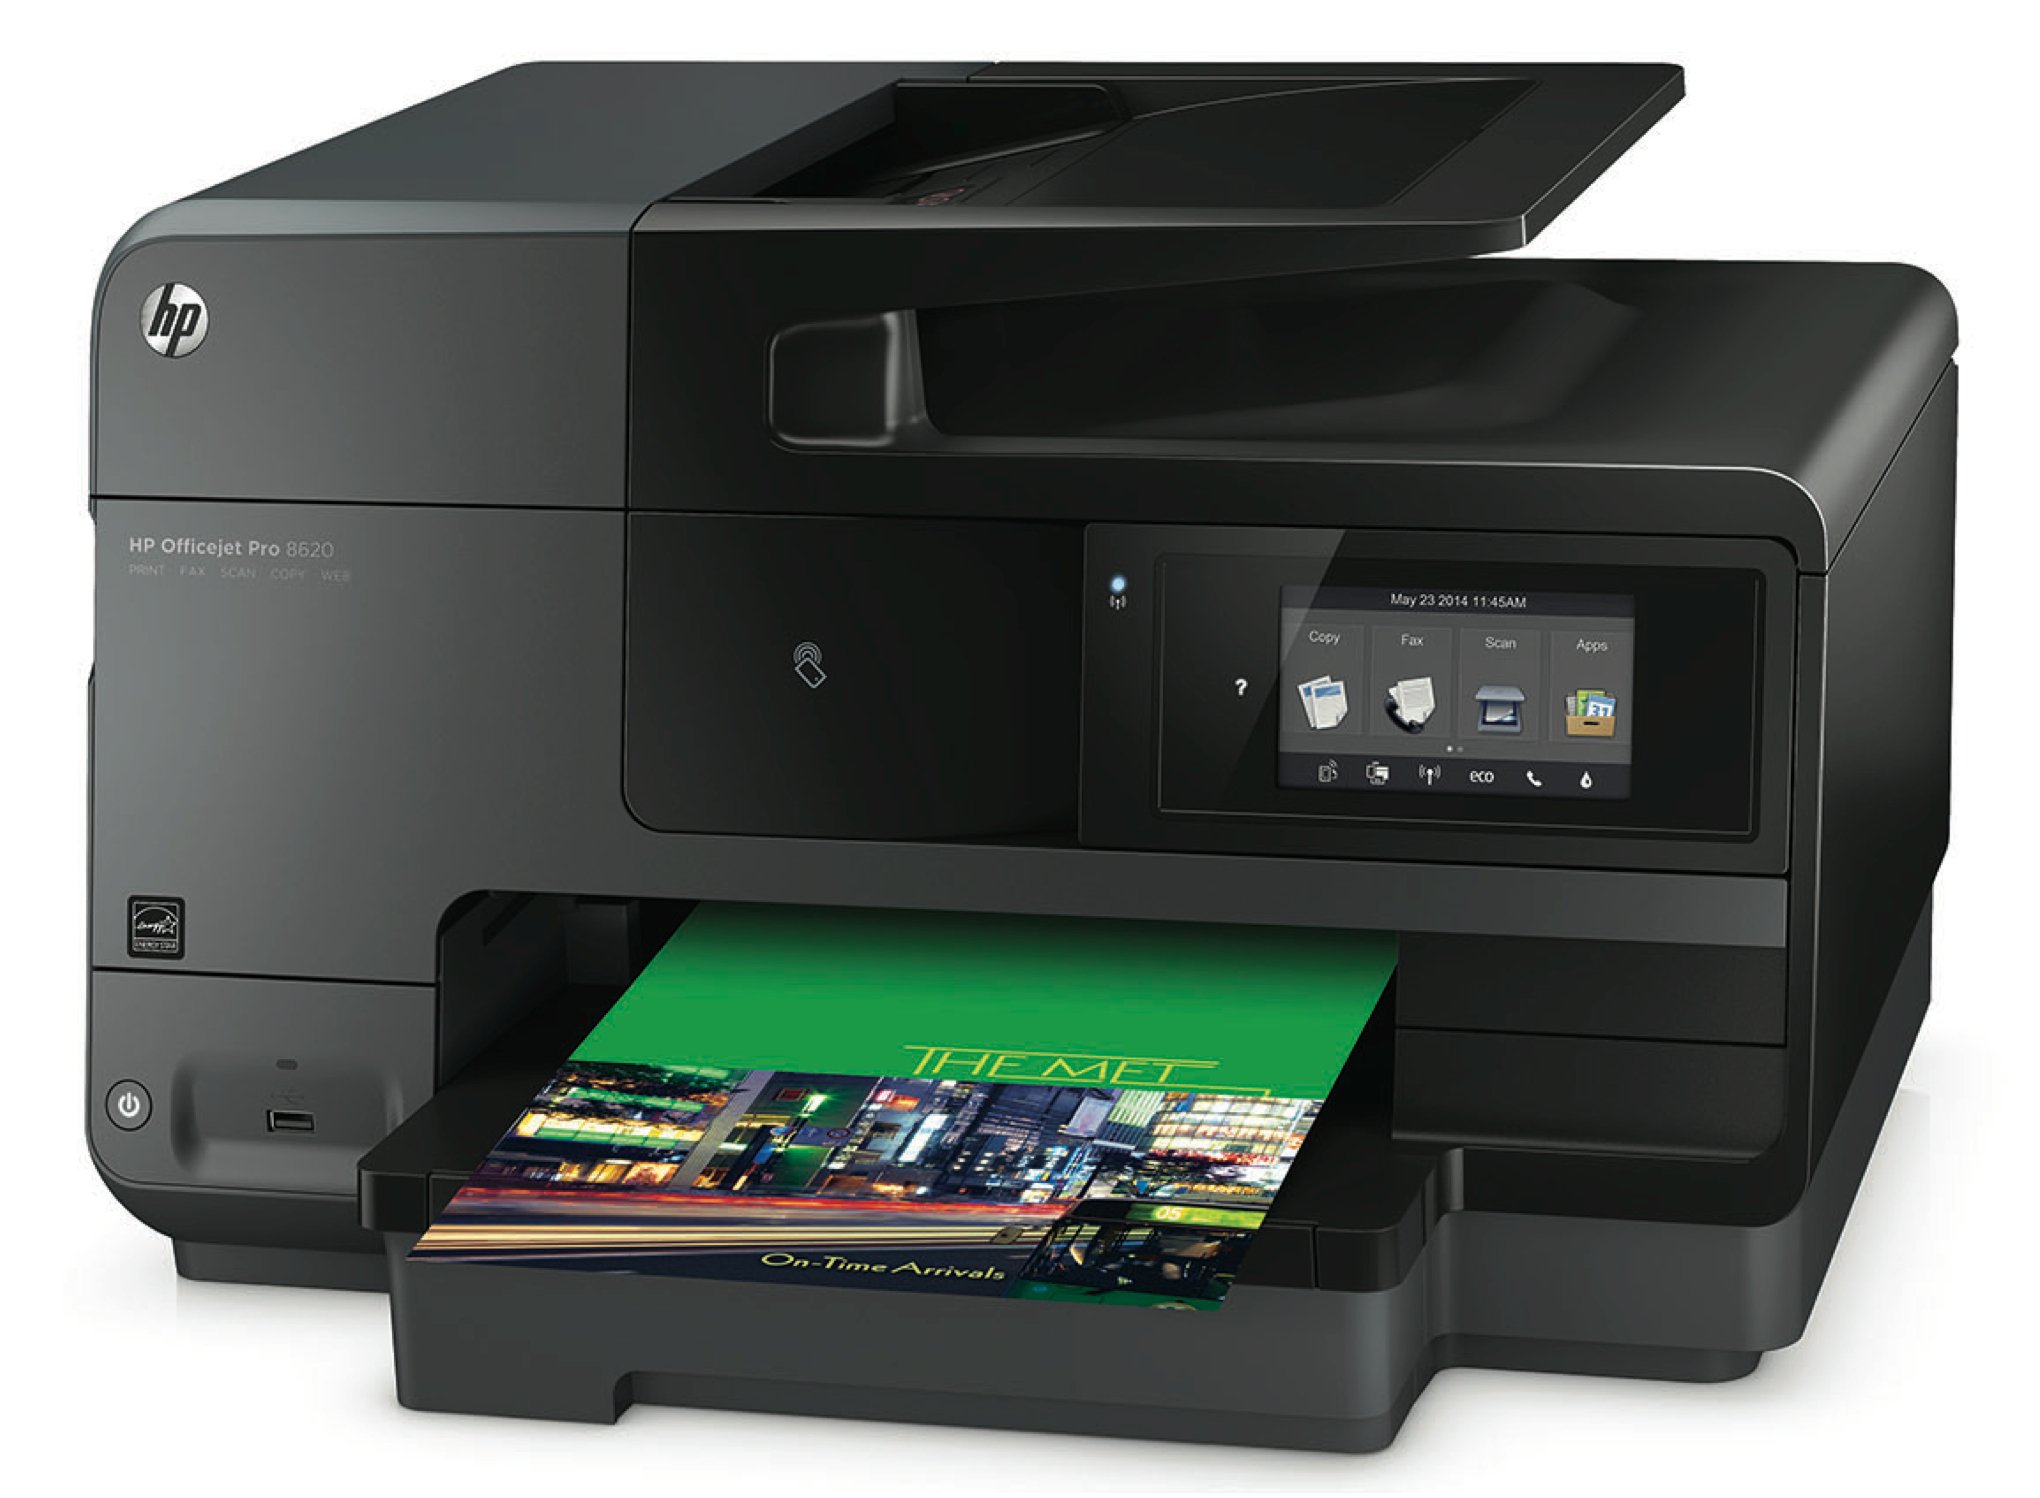 HP Officejet Pro 8620 im Test: Drucker, Scanner, Fax & Kopierer für Büro & Zuhause 2